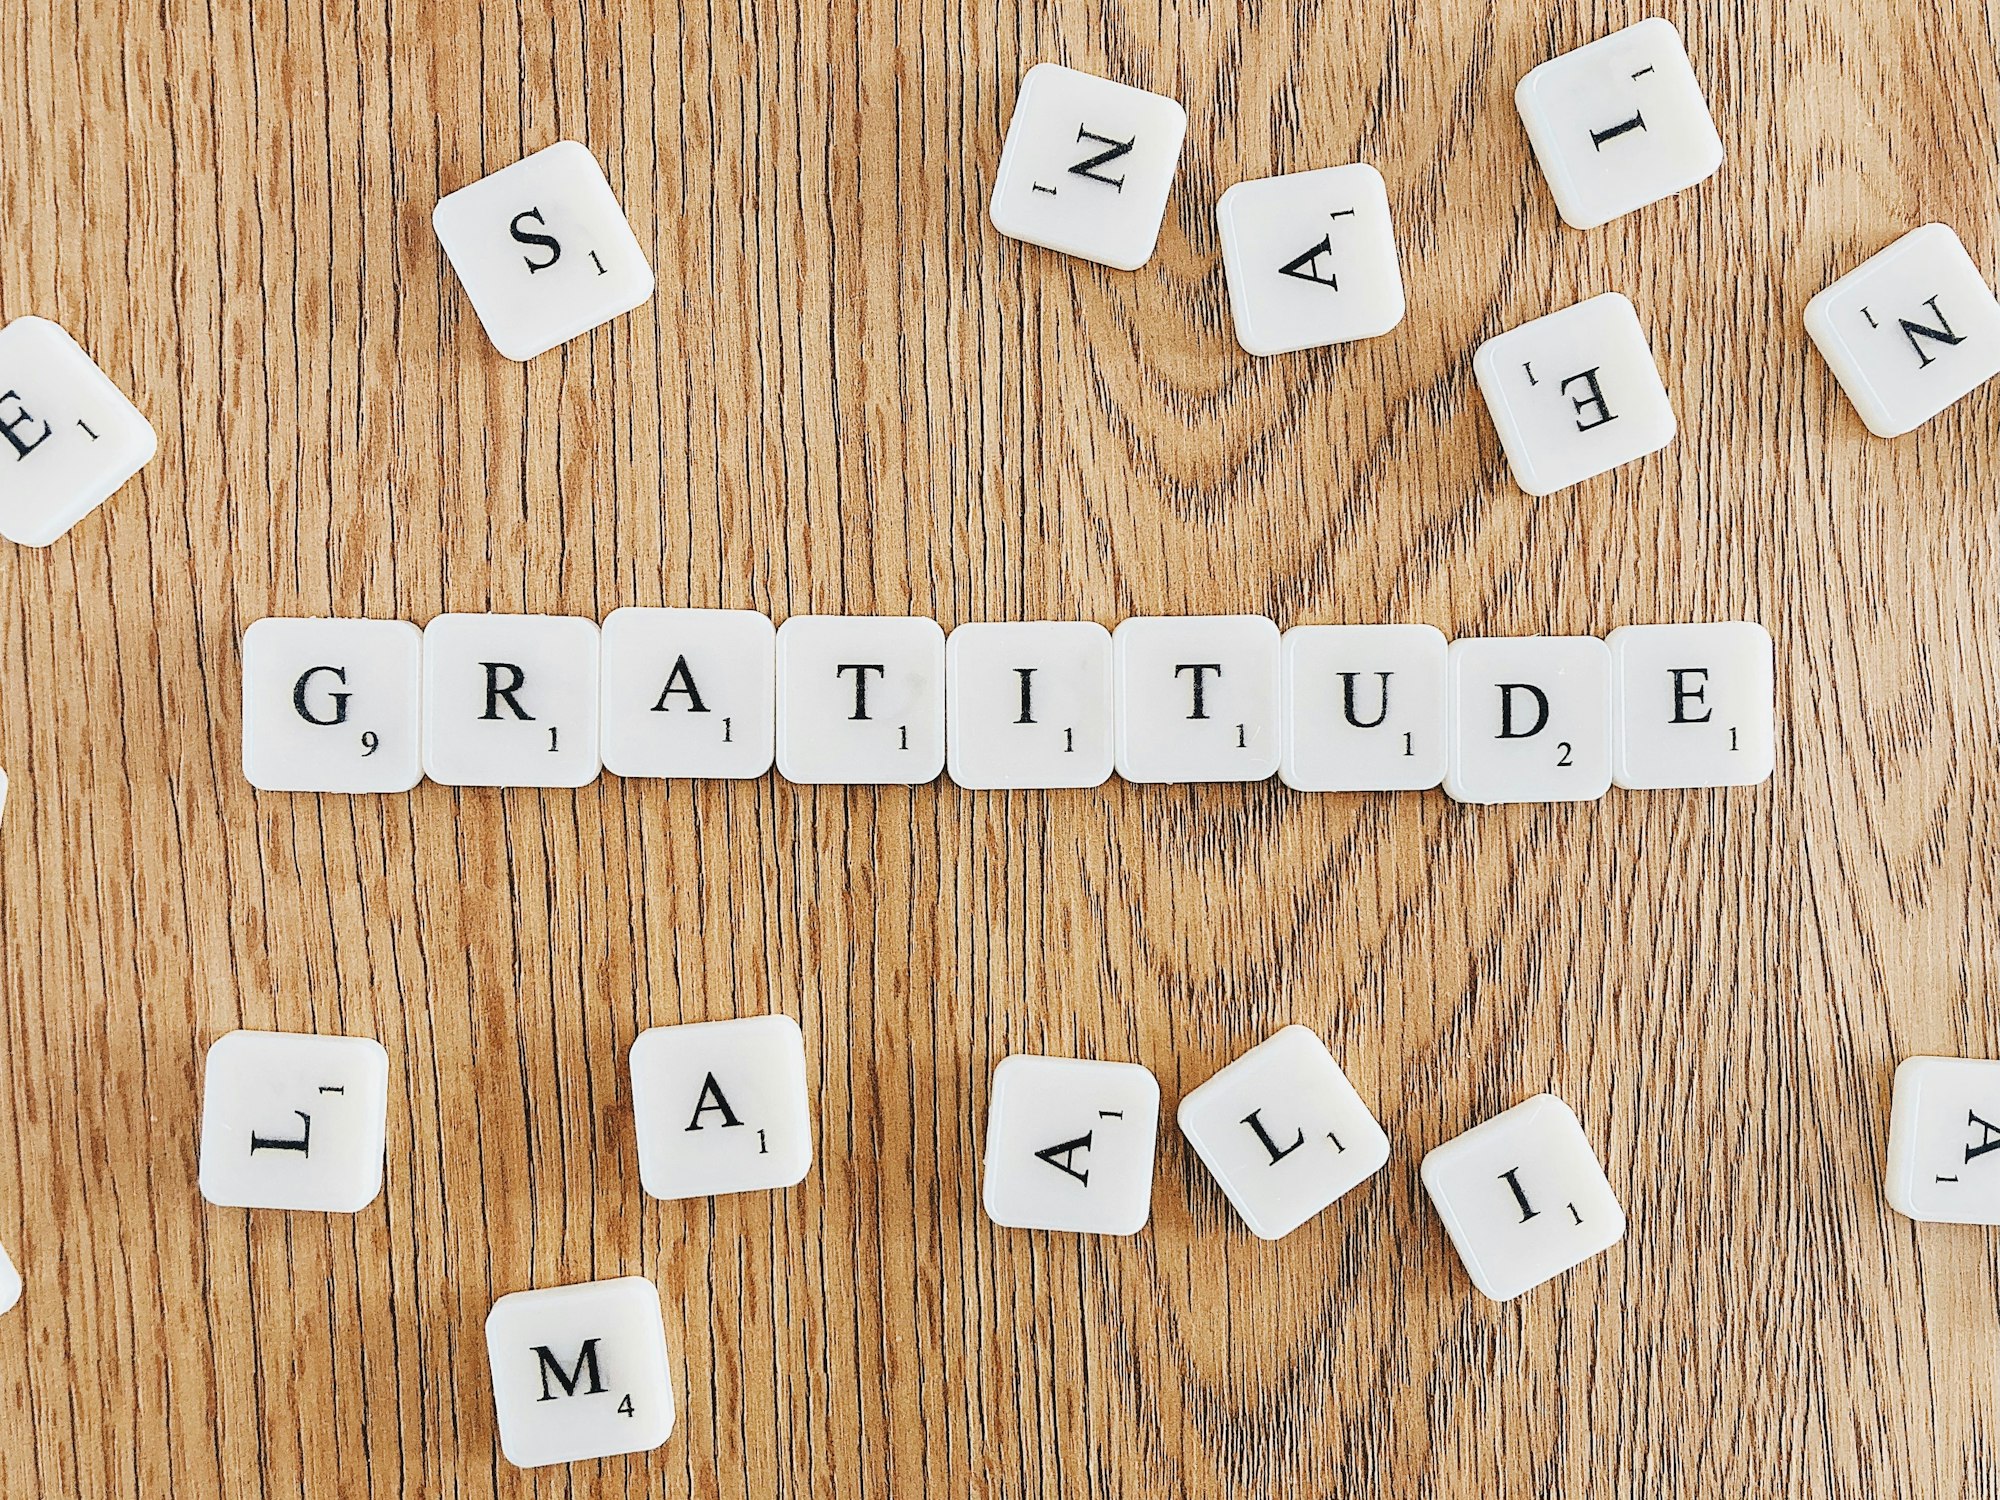 “Gratitude” written with scrabble tiles